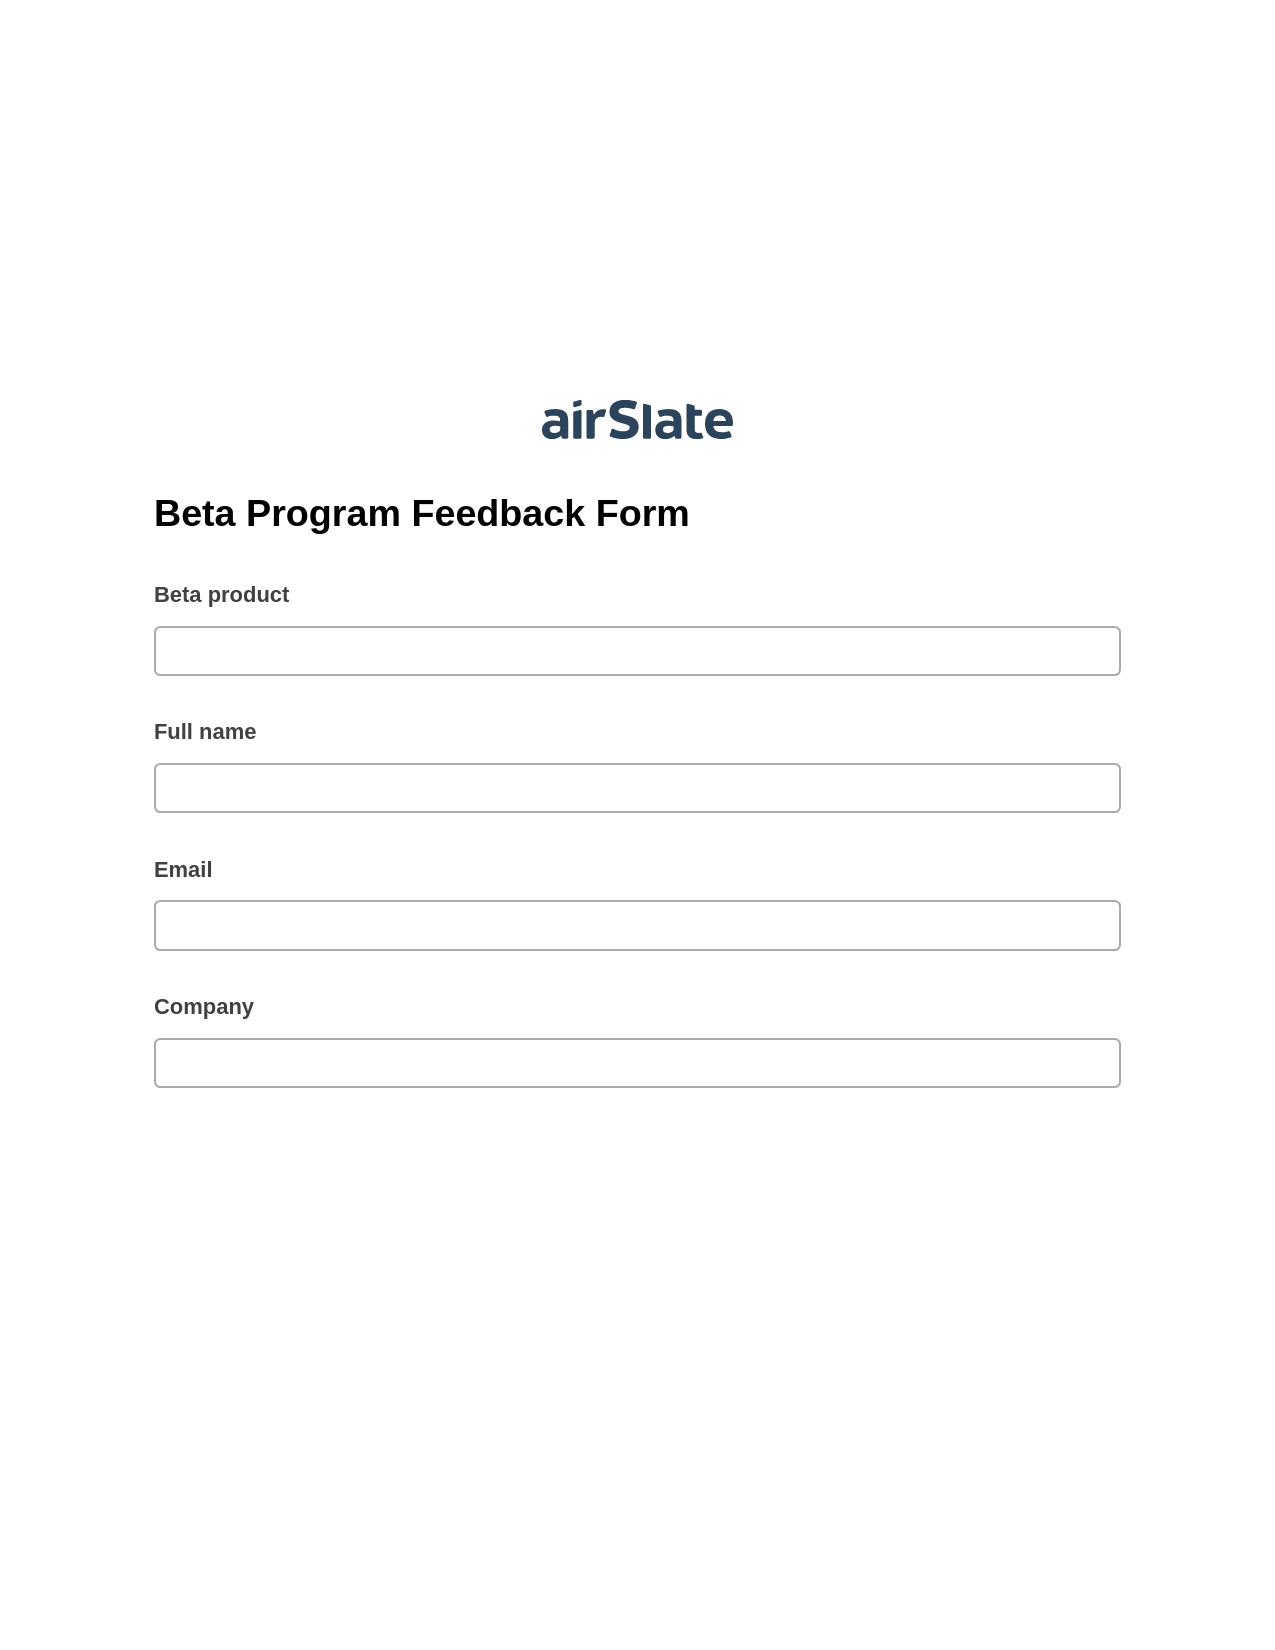 Beta Program Feedback Form Pre-fill from Salesforce Record Bot, Update Salesforce Record Bot, Archive to SharePoint Folder Bot